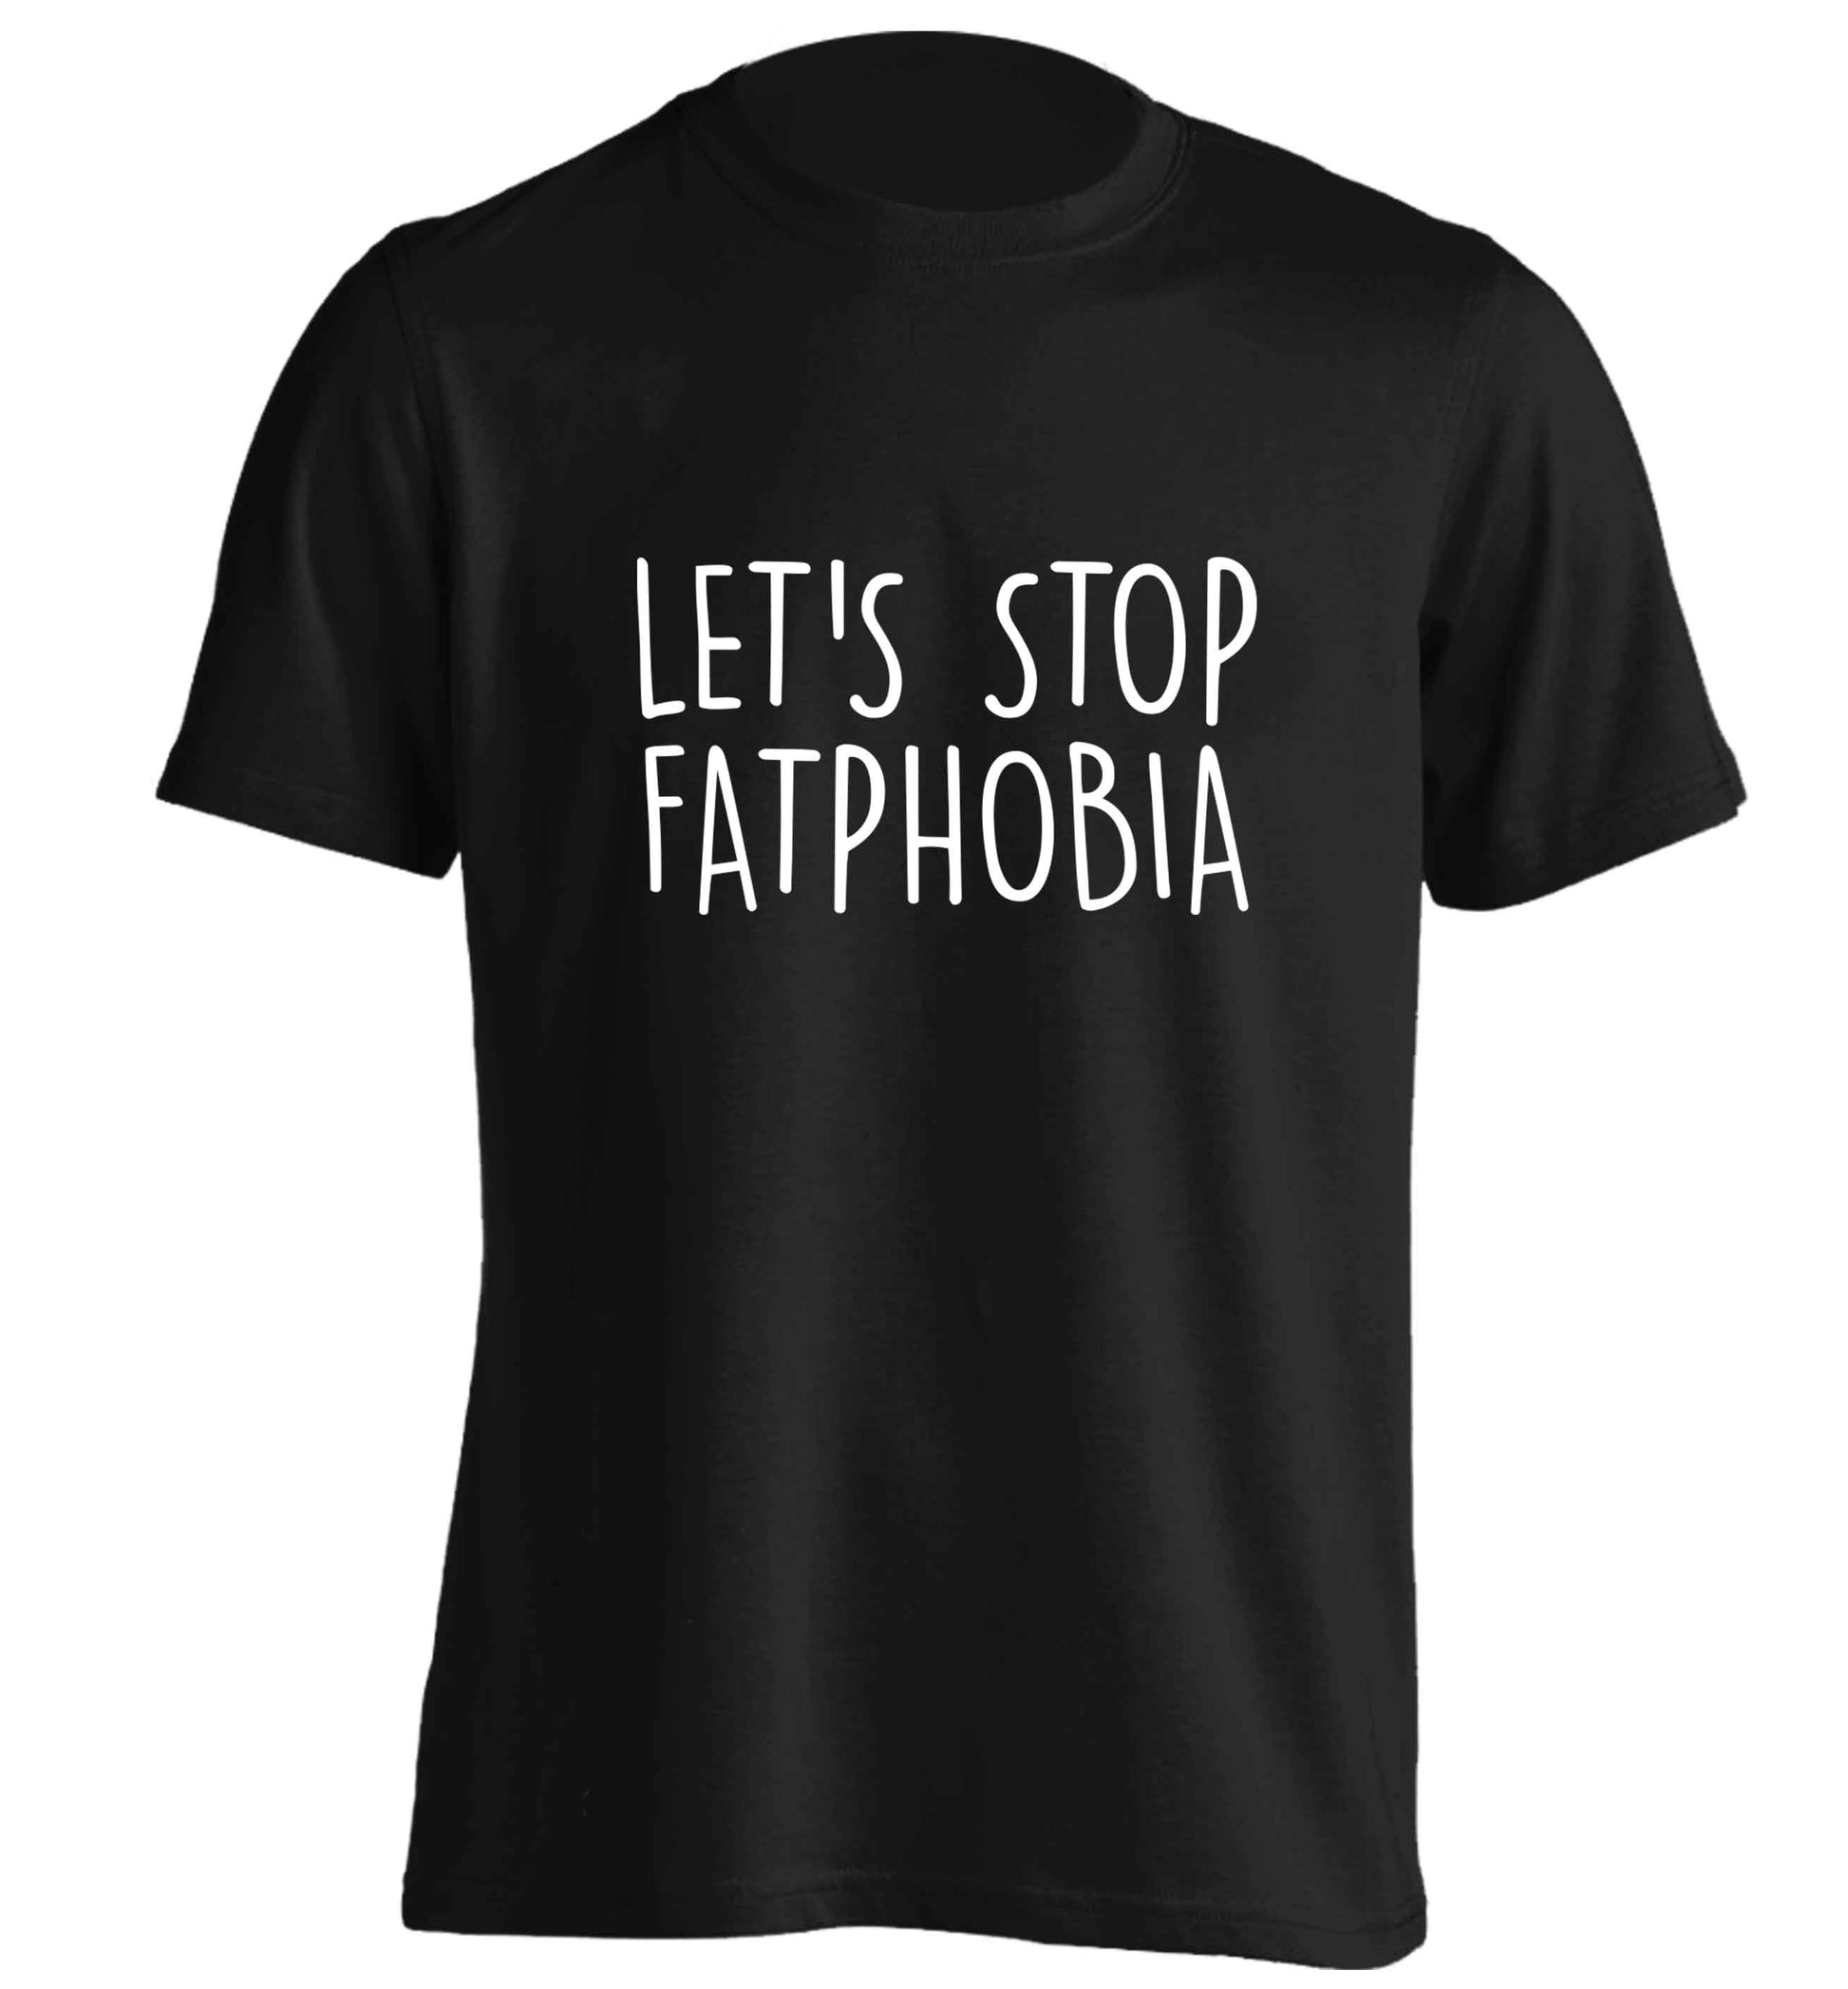 Let's stop fatphobia adults unisex black Tshirt 2XL